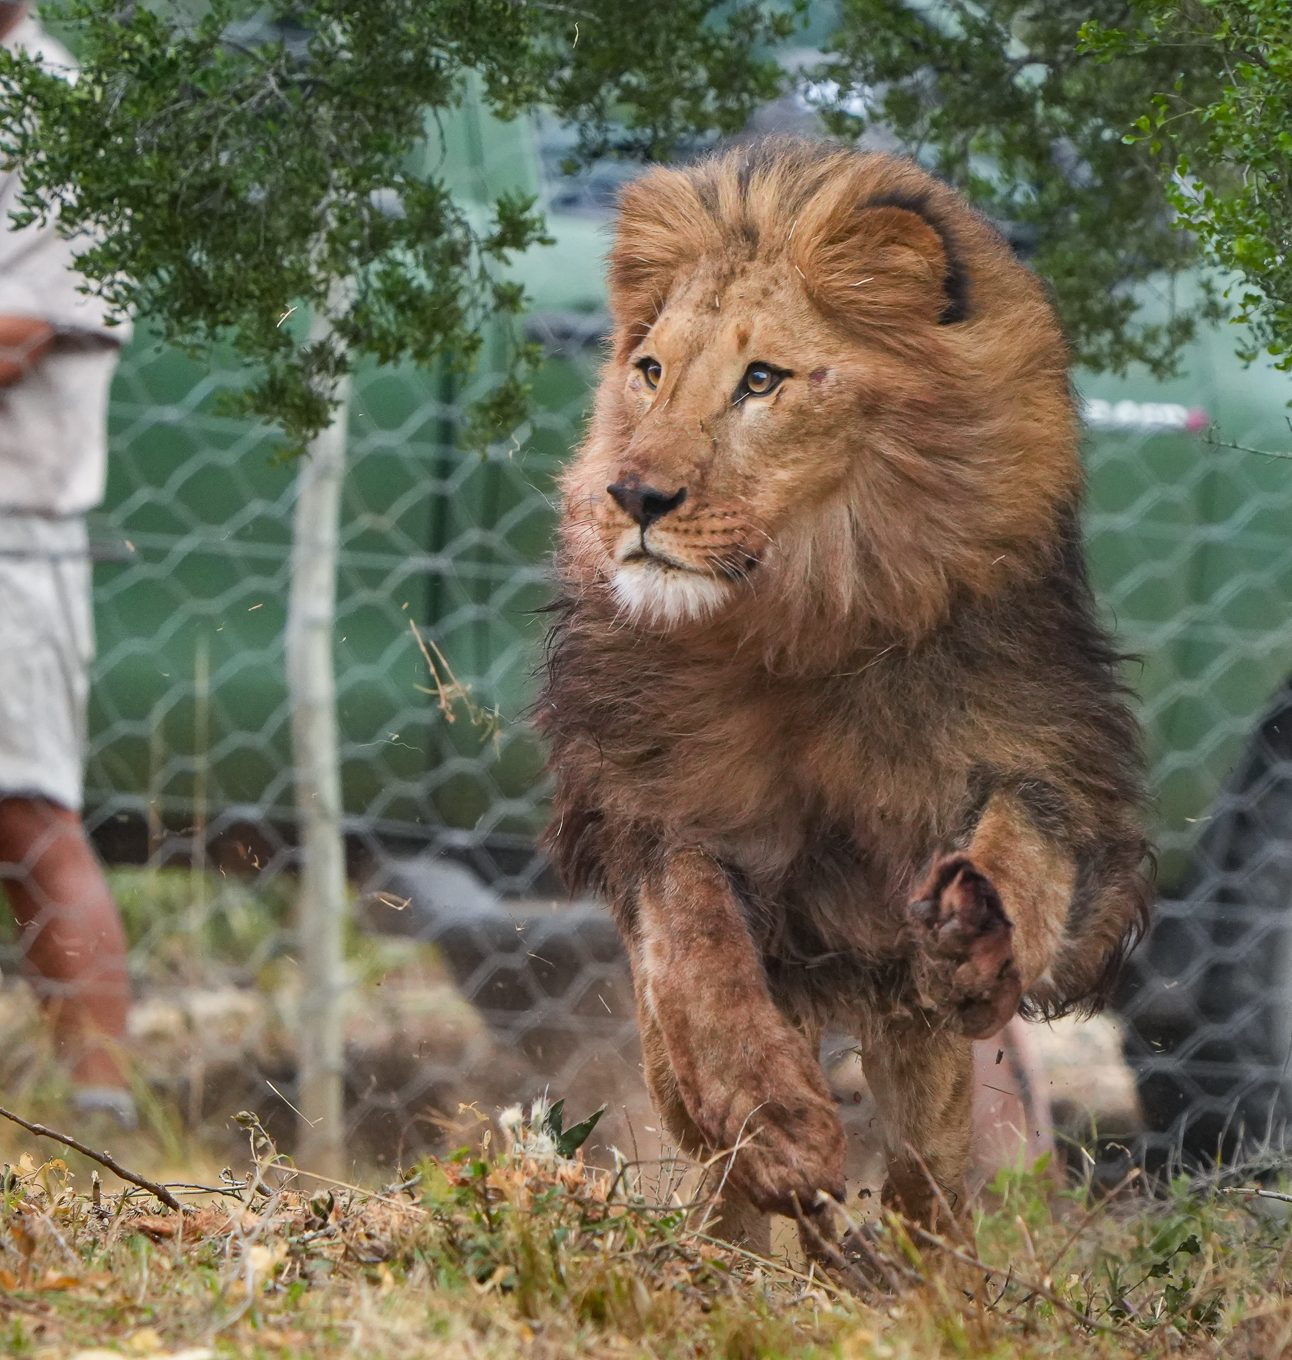 Tsar, a male lion, is galloping as he enters his new enclosure at Shamwari Big Cat Sanctuary